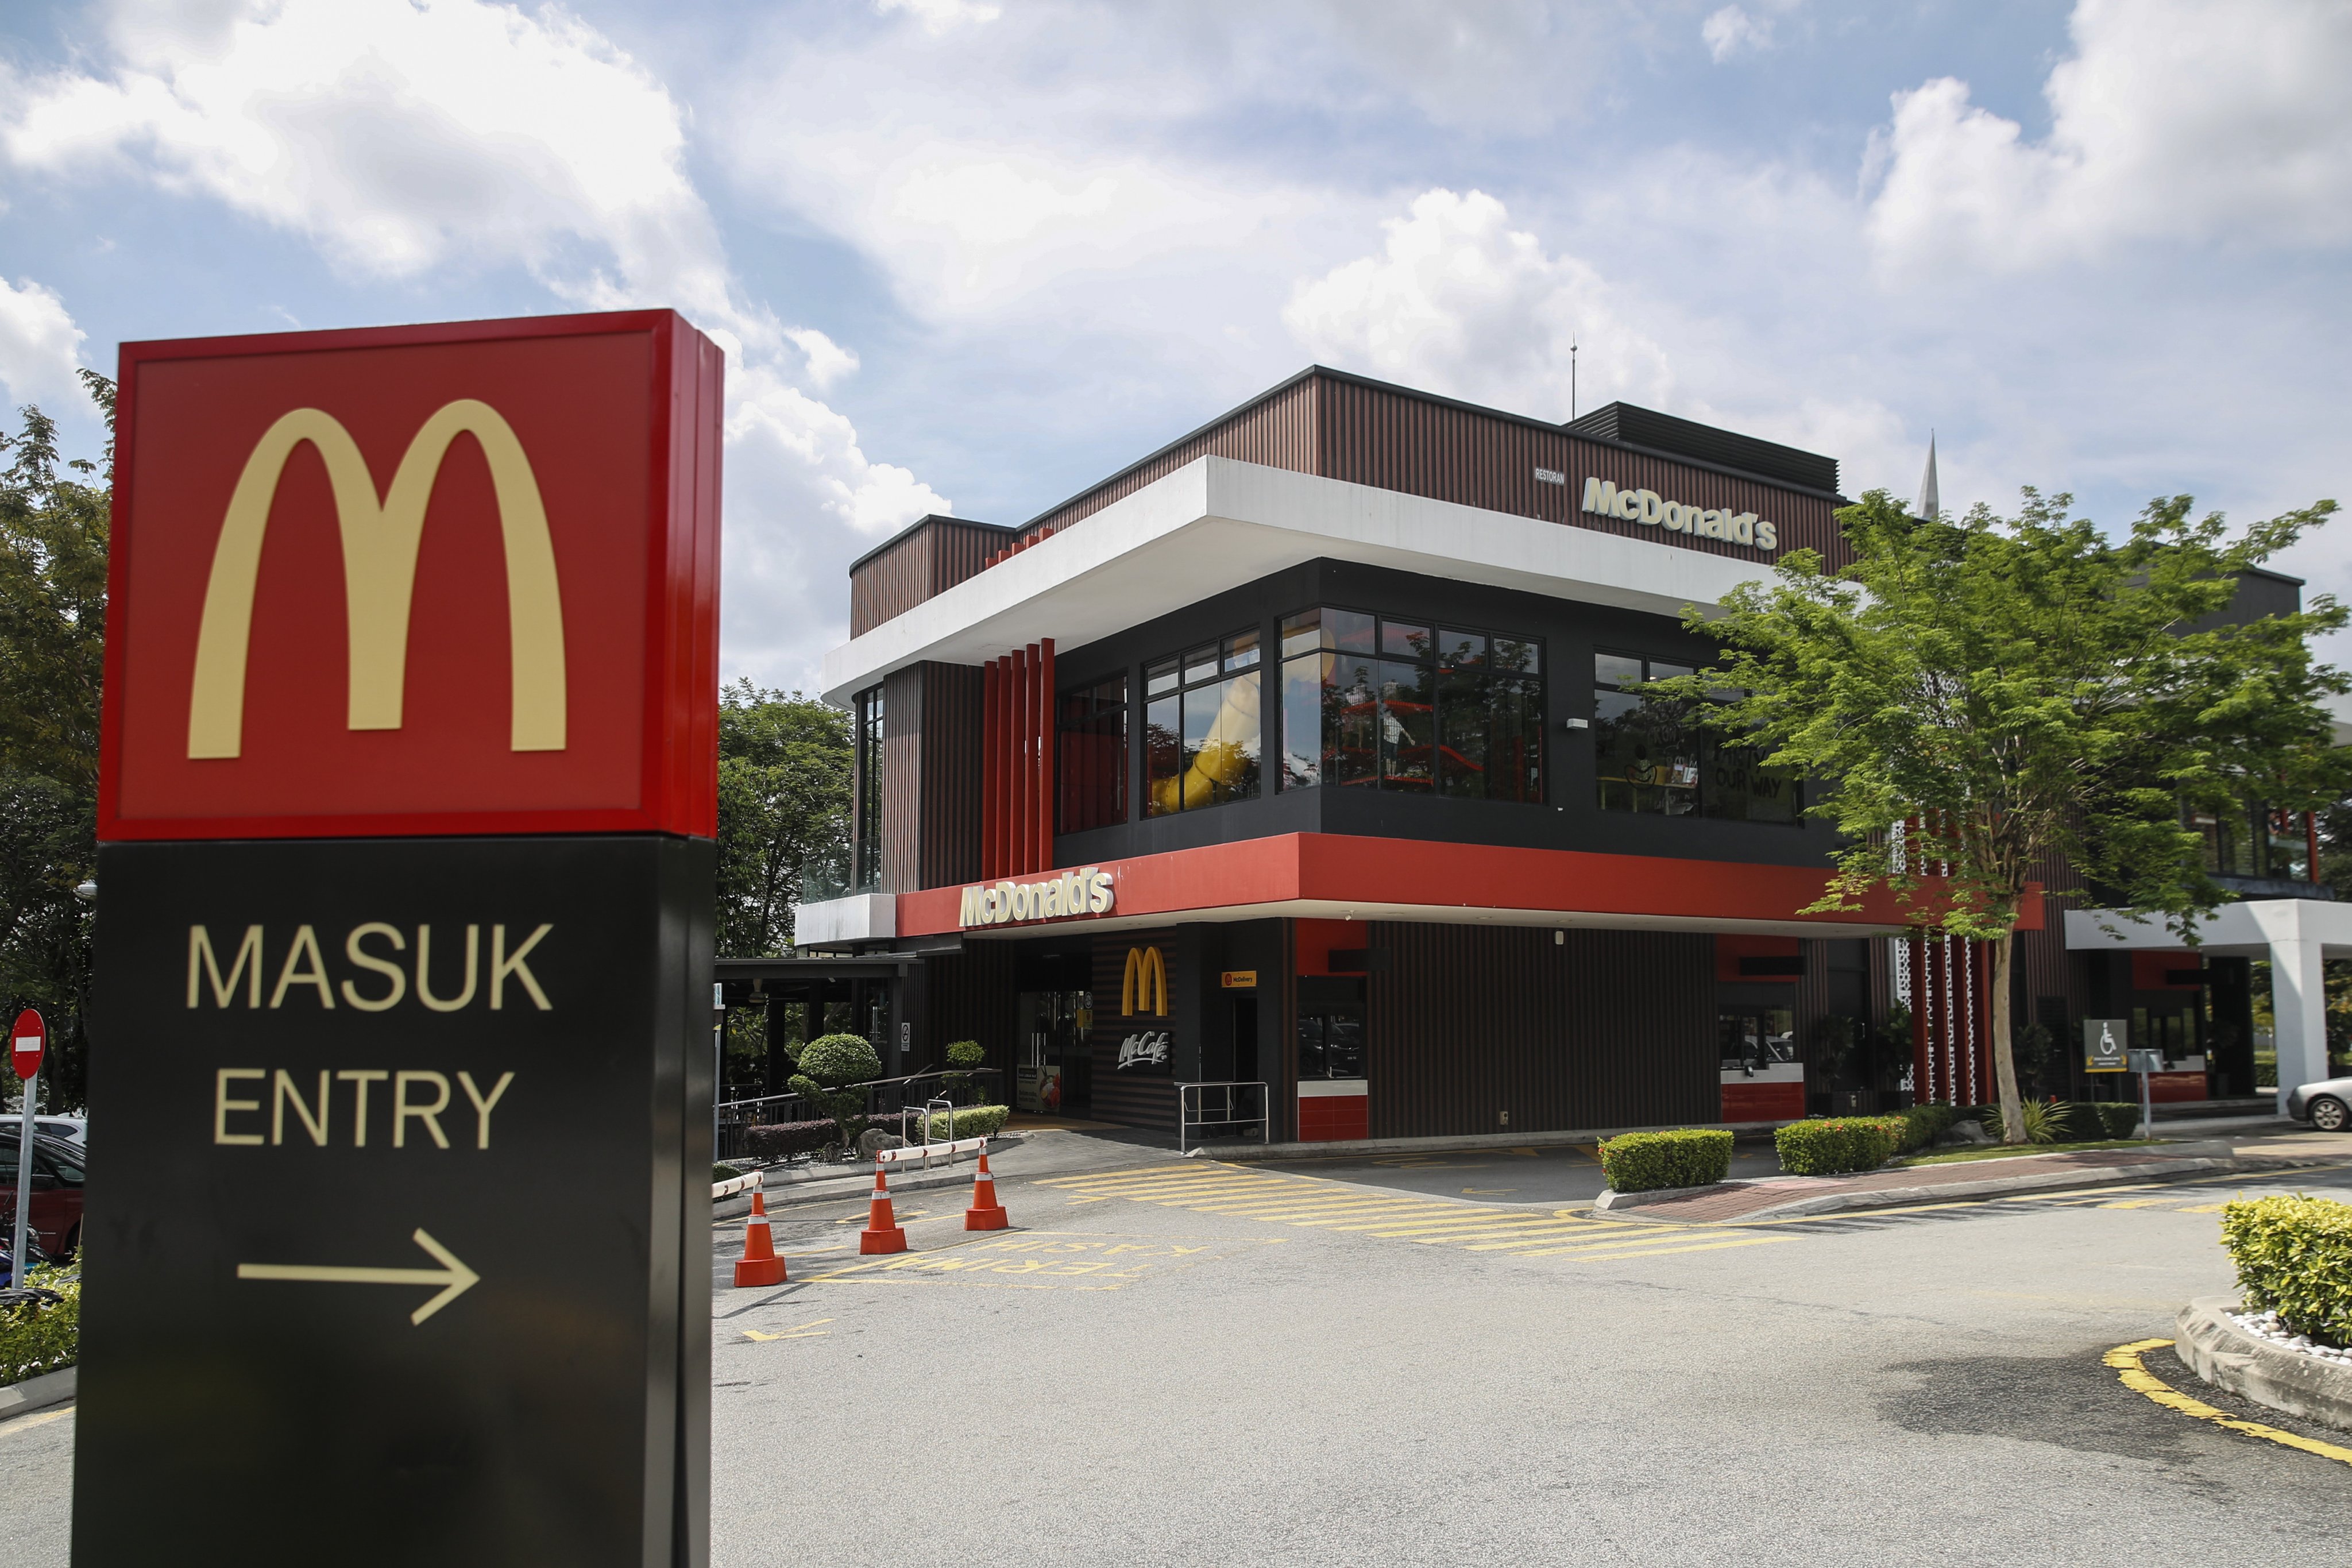 McDonald's: Latest News and Updates